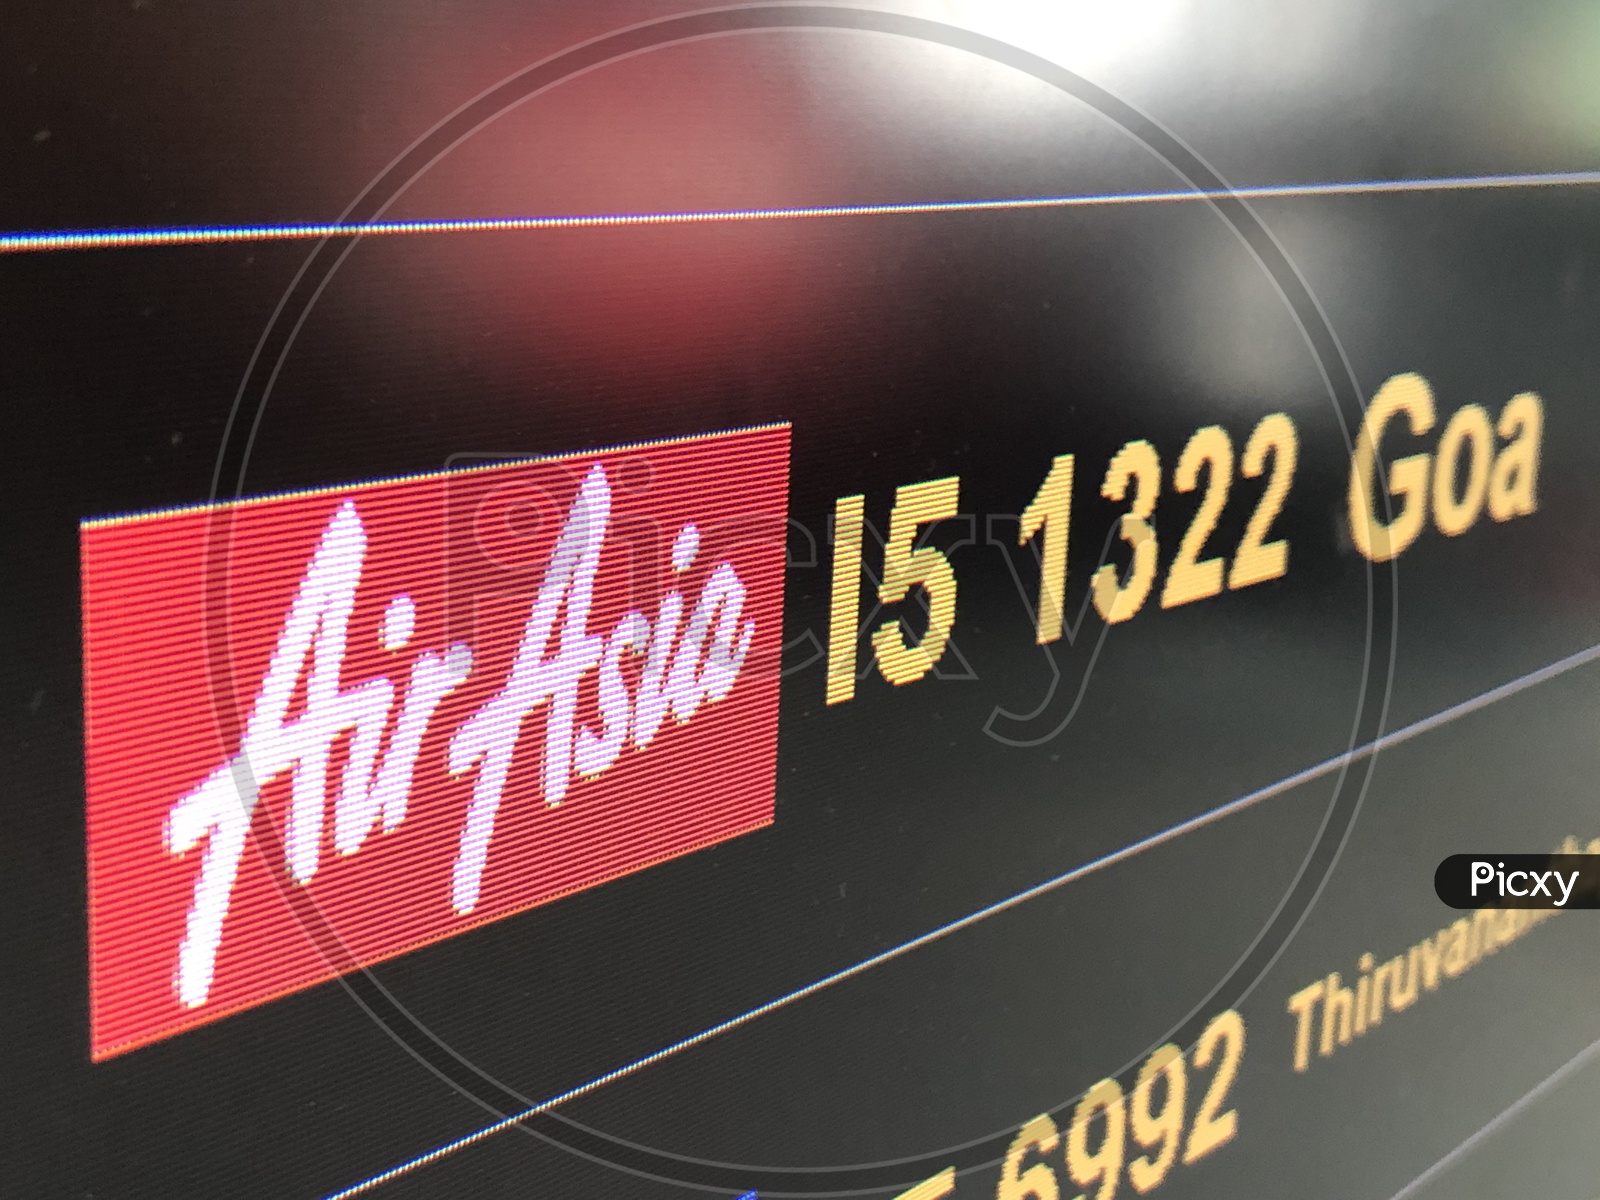 Air Asia Goa flight on sign board